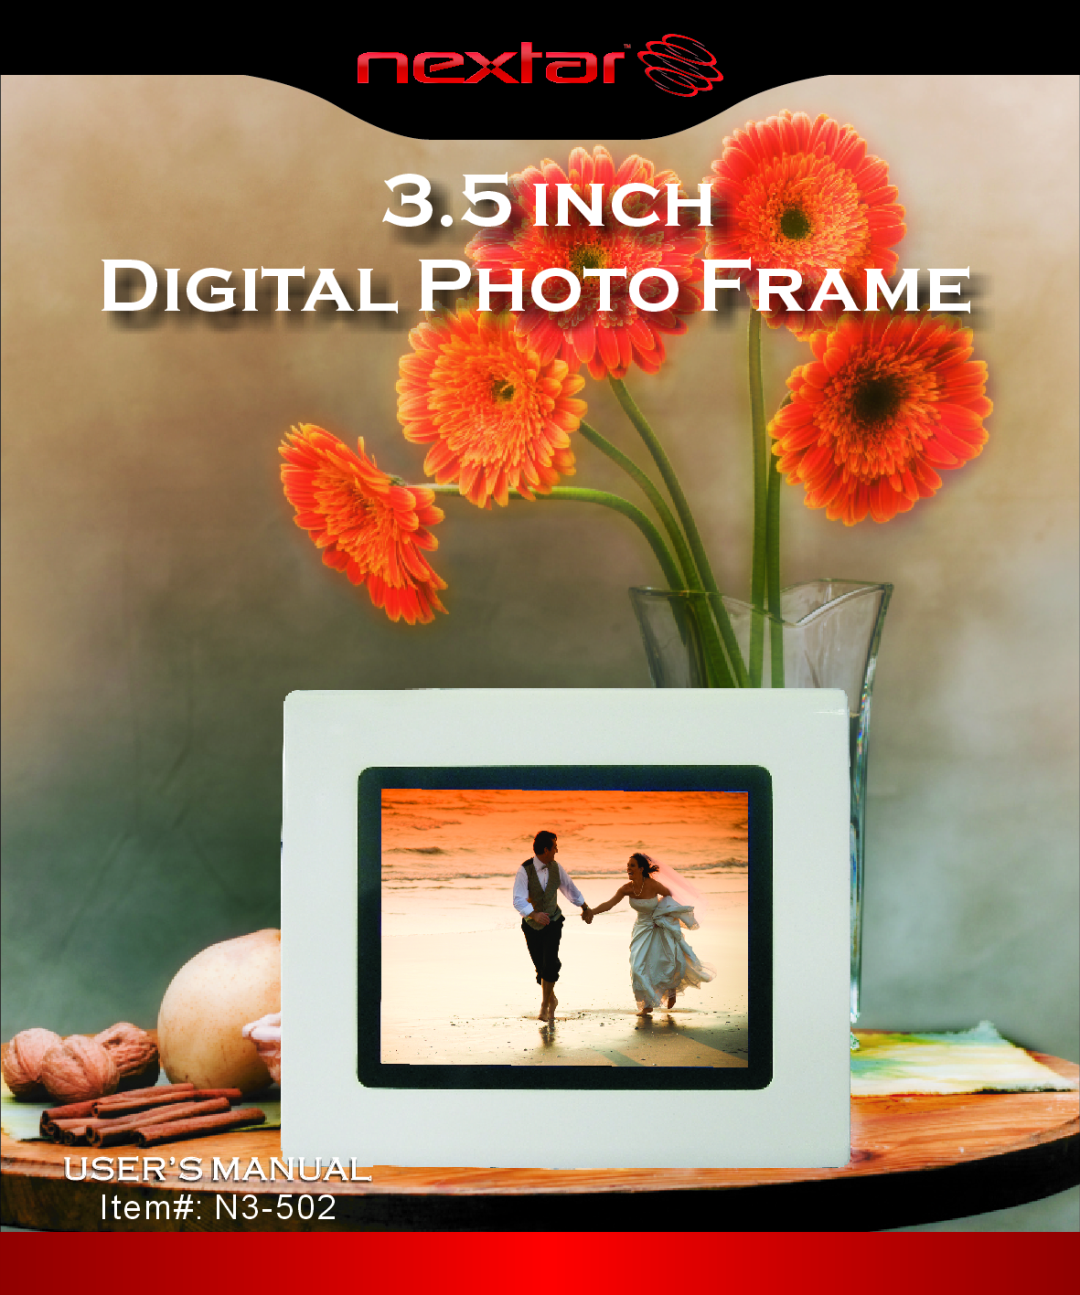 Nextar user manual Inch, Digital Photo Frame, Item# N3-502, User’S Manual 